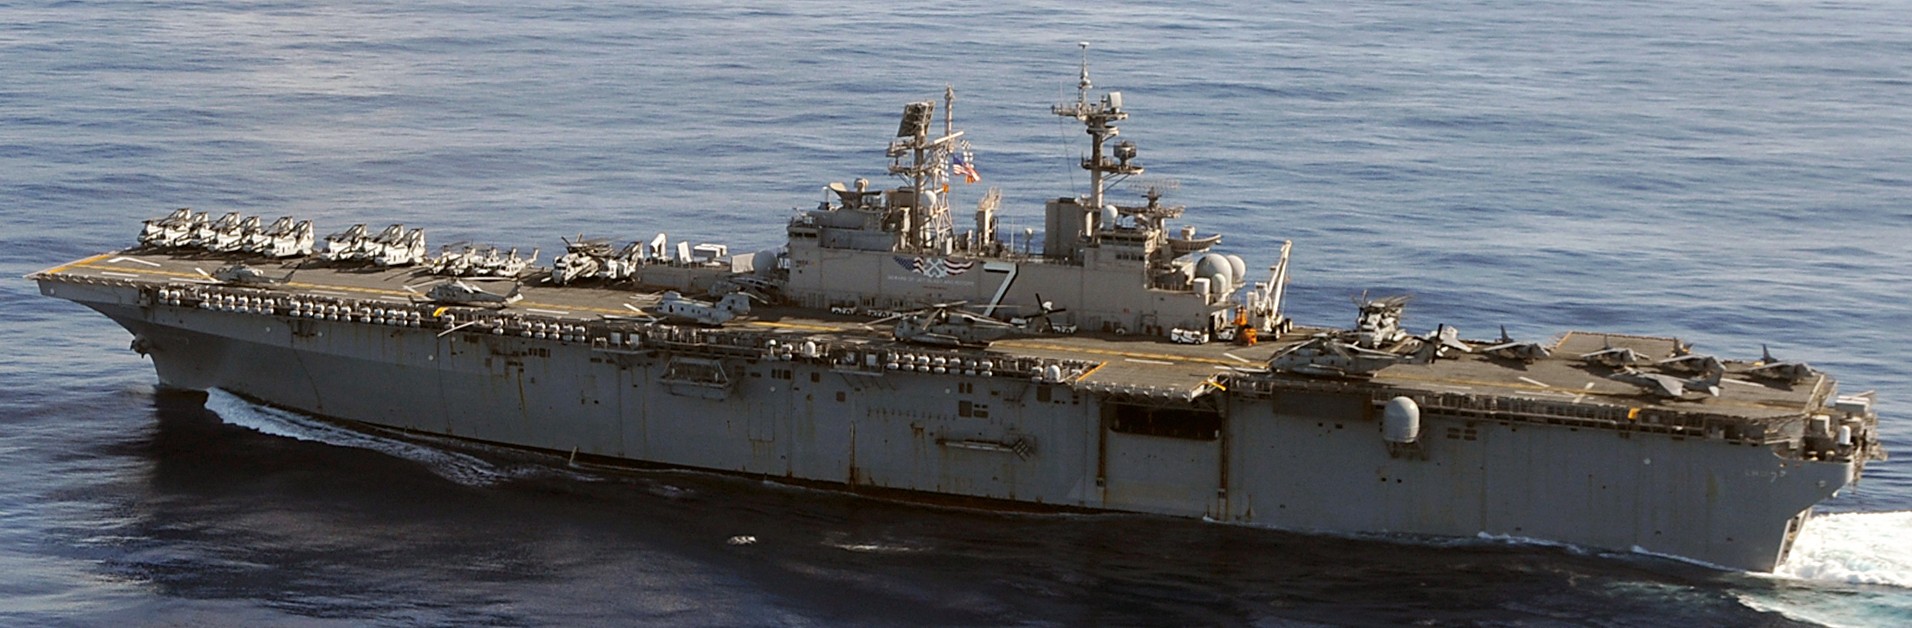 lhd-7 uss iwo jima wasp class amphibious assault ship dock landing helicopter us navy hmm-264 marines 47